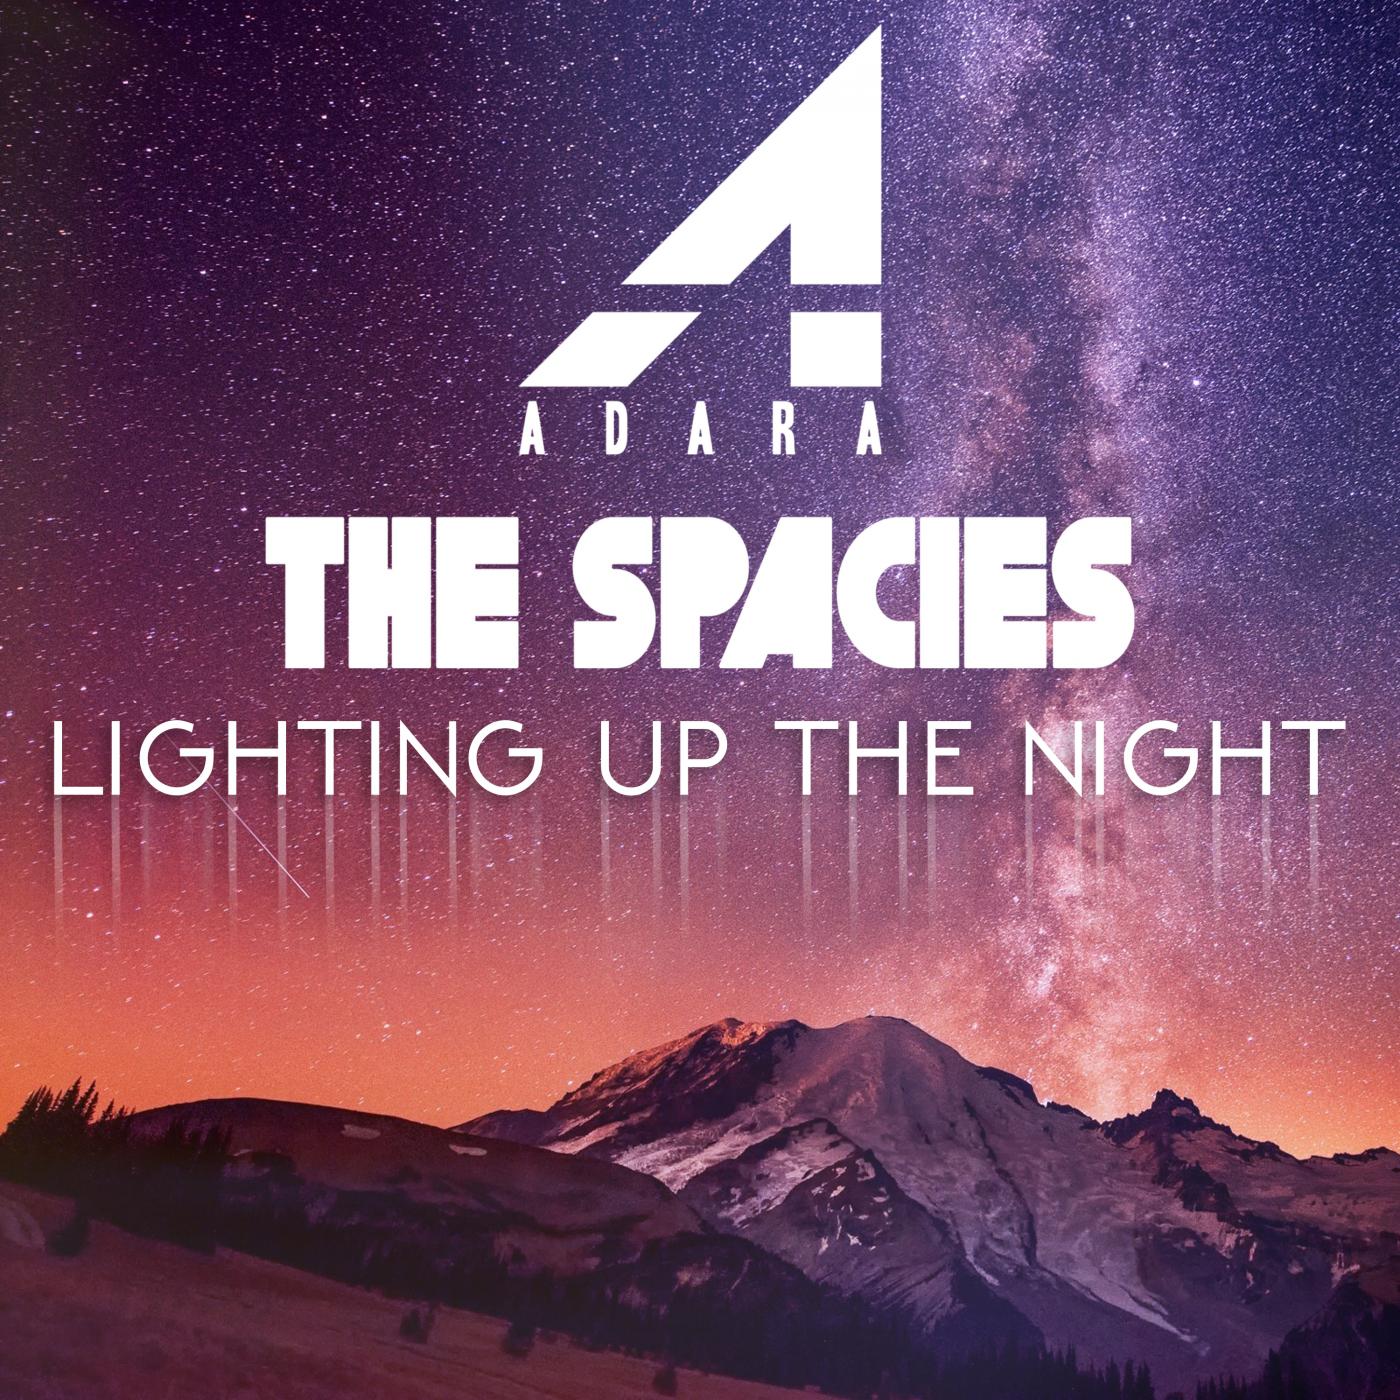 Adara, The Spacies - Lighting Up The Night